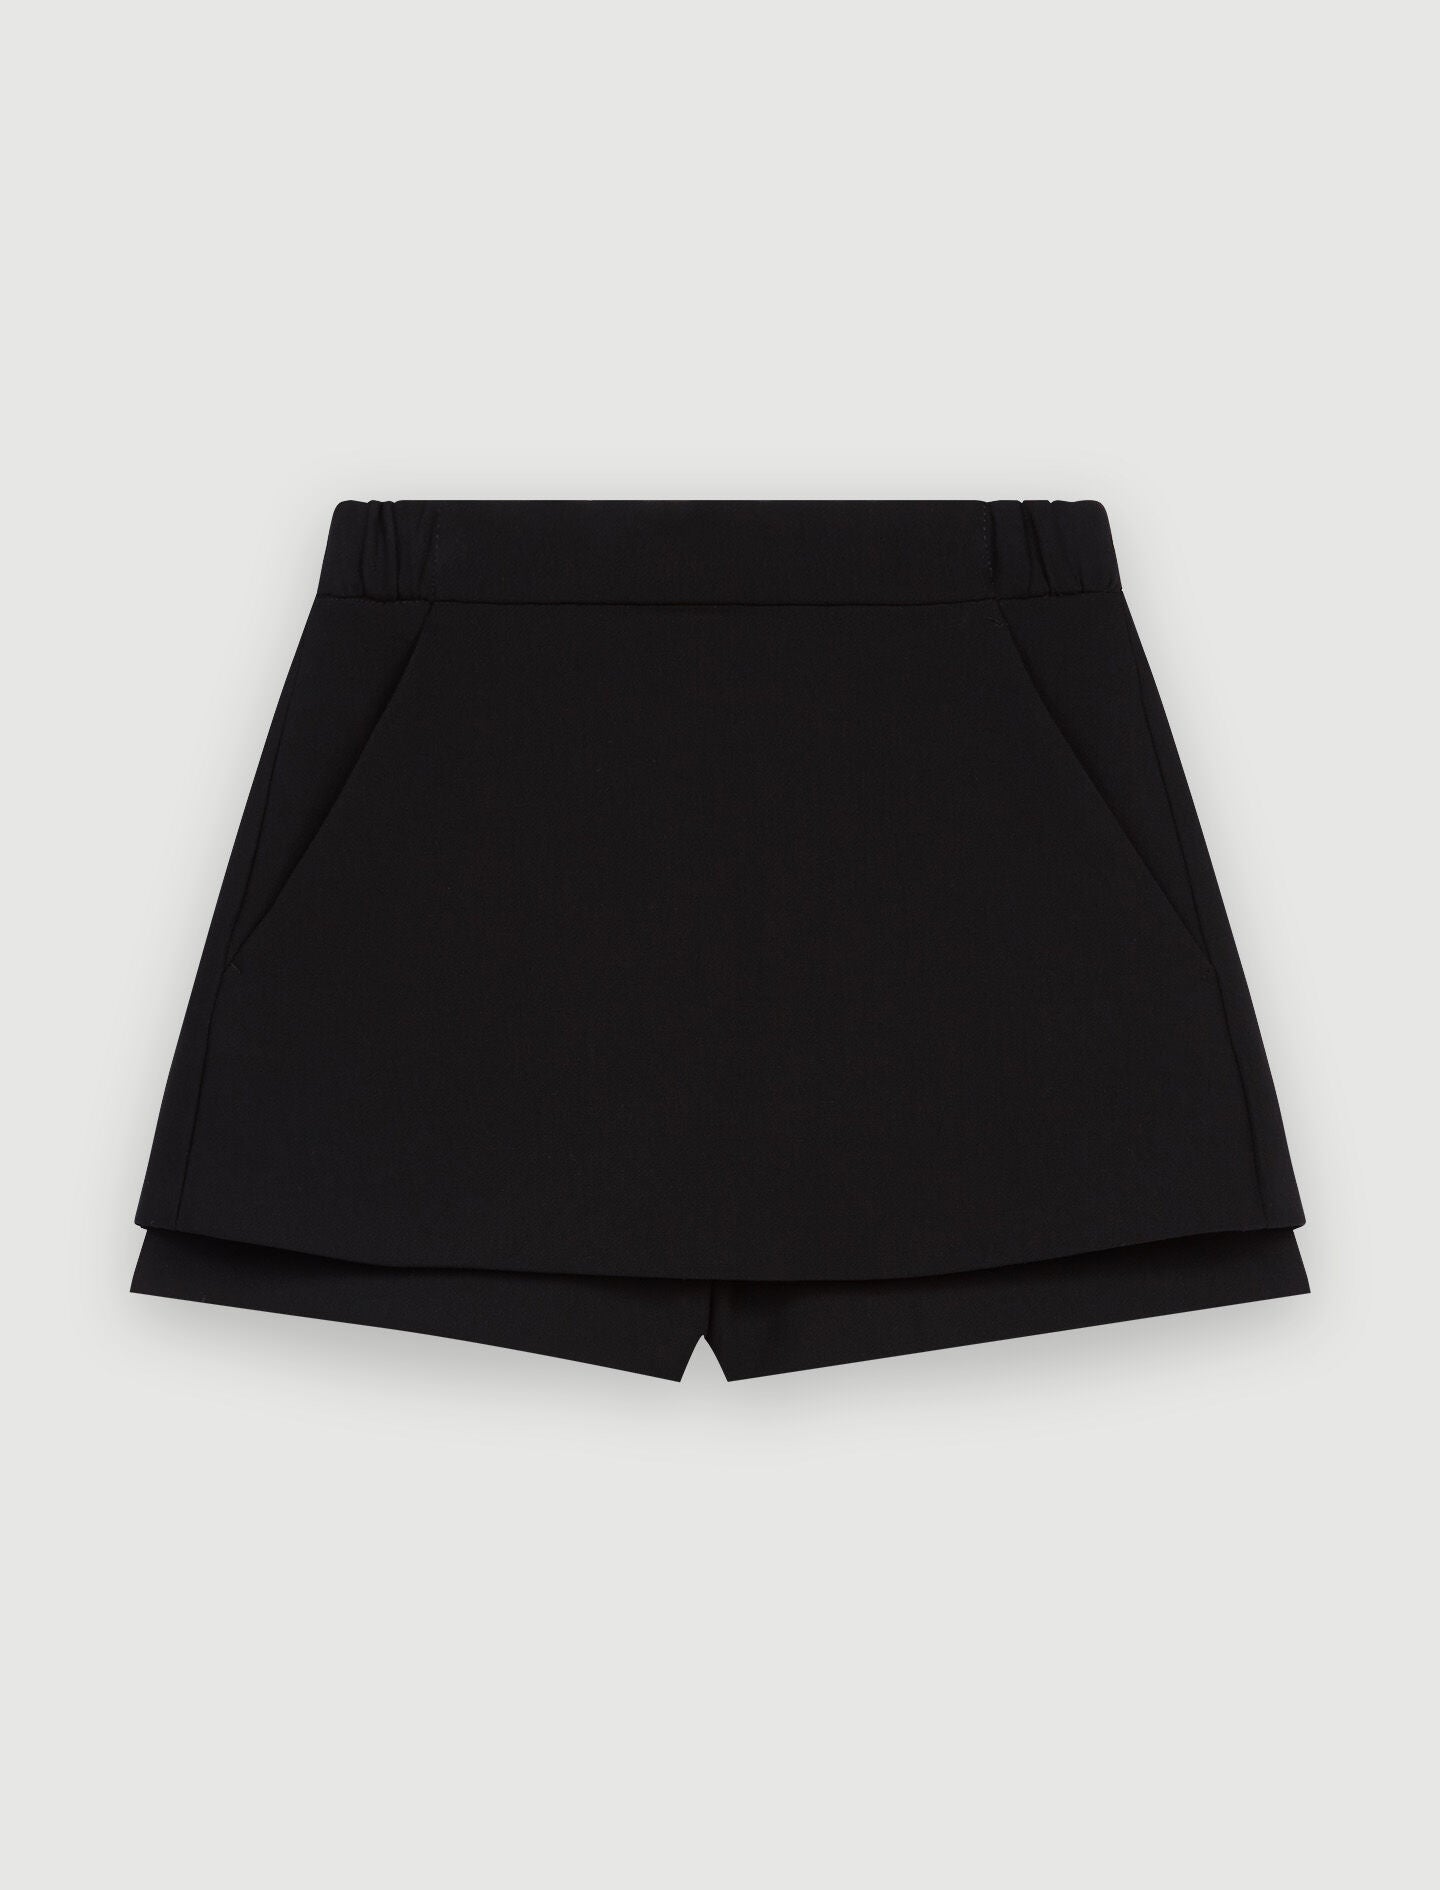 Black-crepe skirt shorts